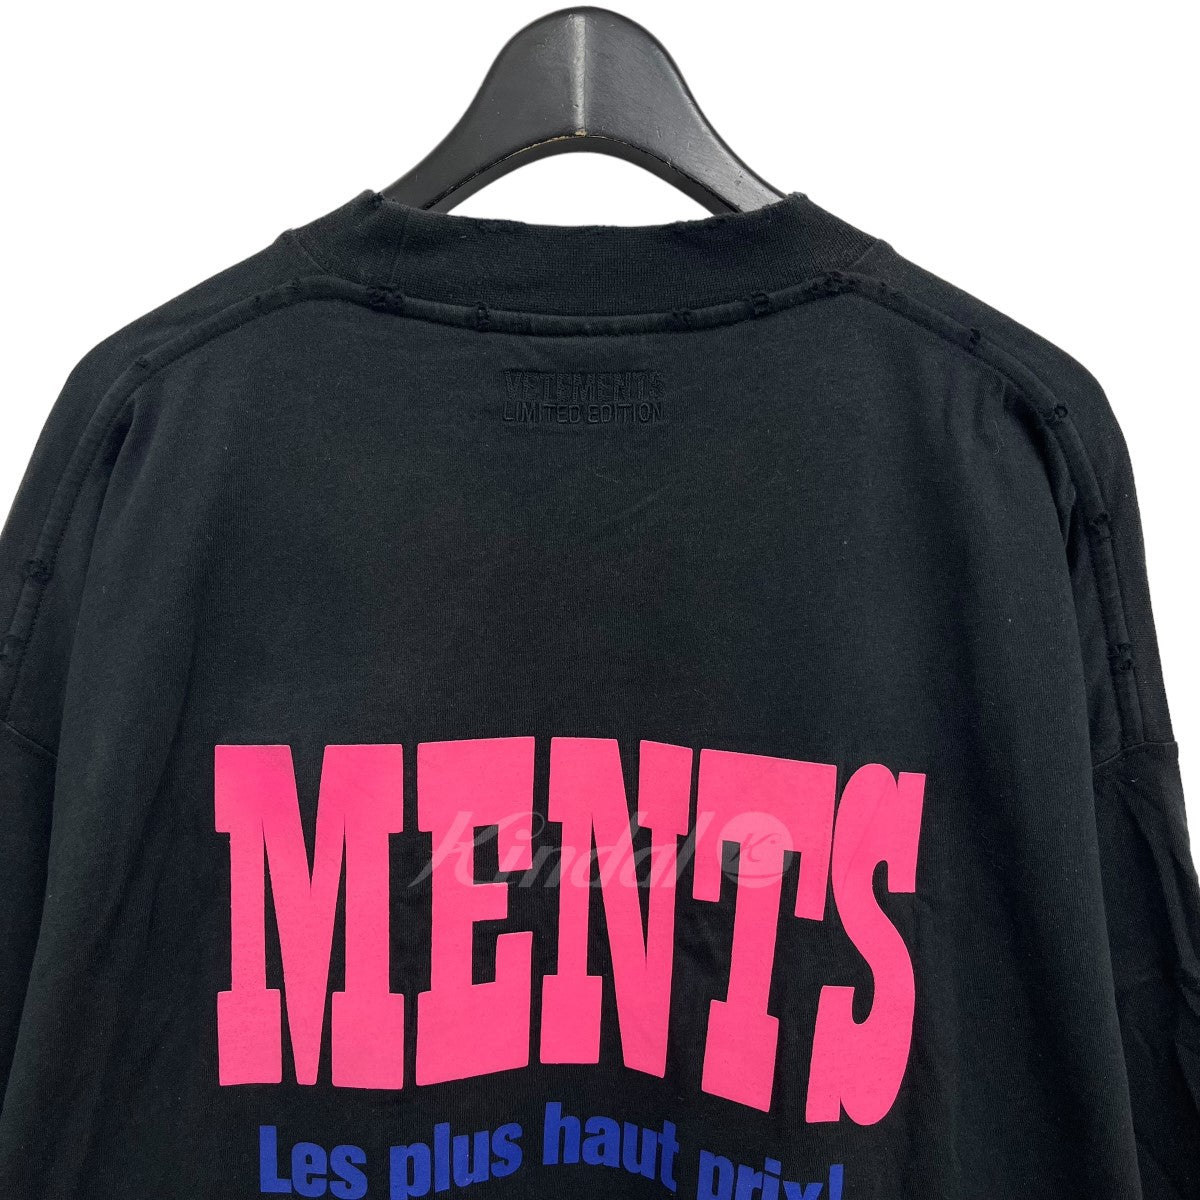 VETEMENTS(ヴェトモン) 2023SS｢ La Haute Couture T-shirt｣Tシャツ 